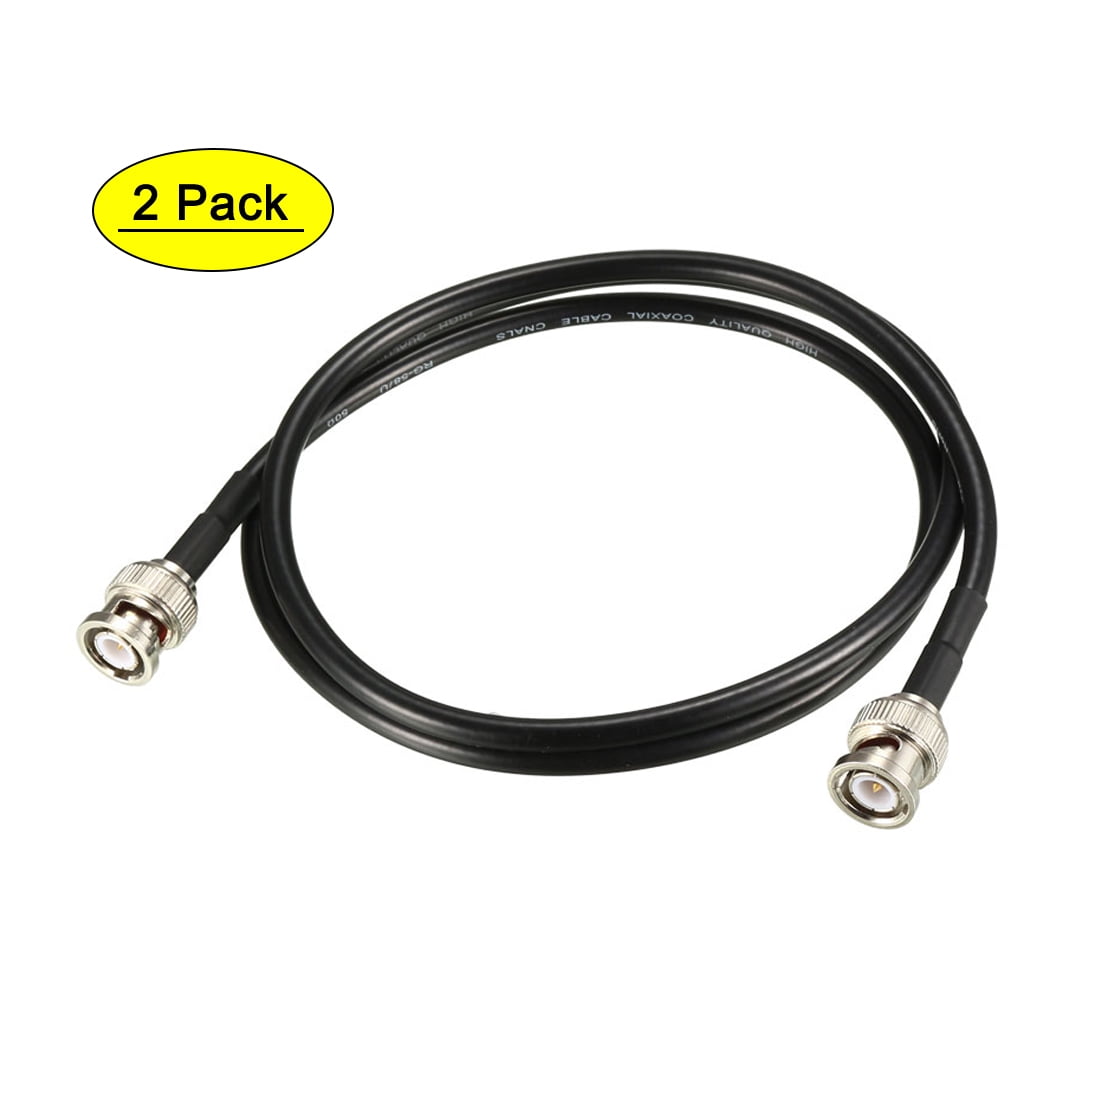 2 per order COAXIAL BNC Straight Plug to BNC Straight Plug on RG-58 cable 6"